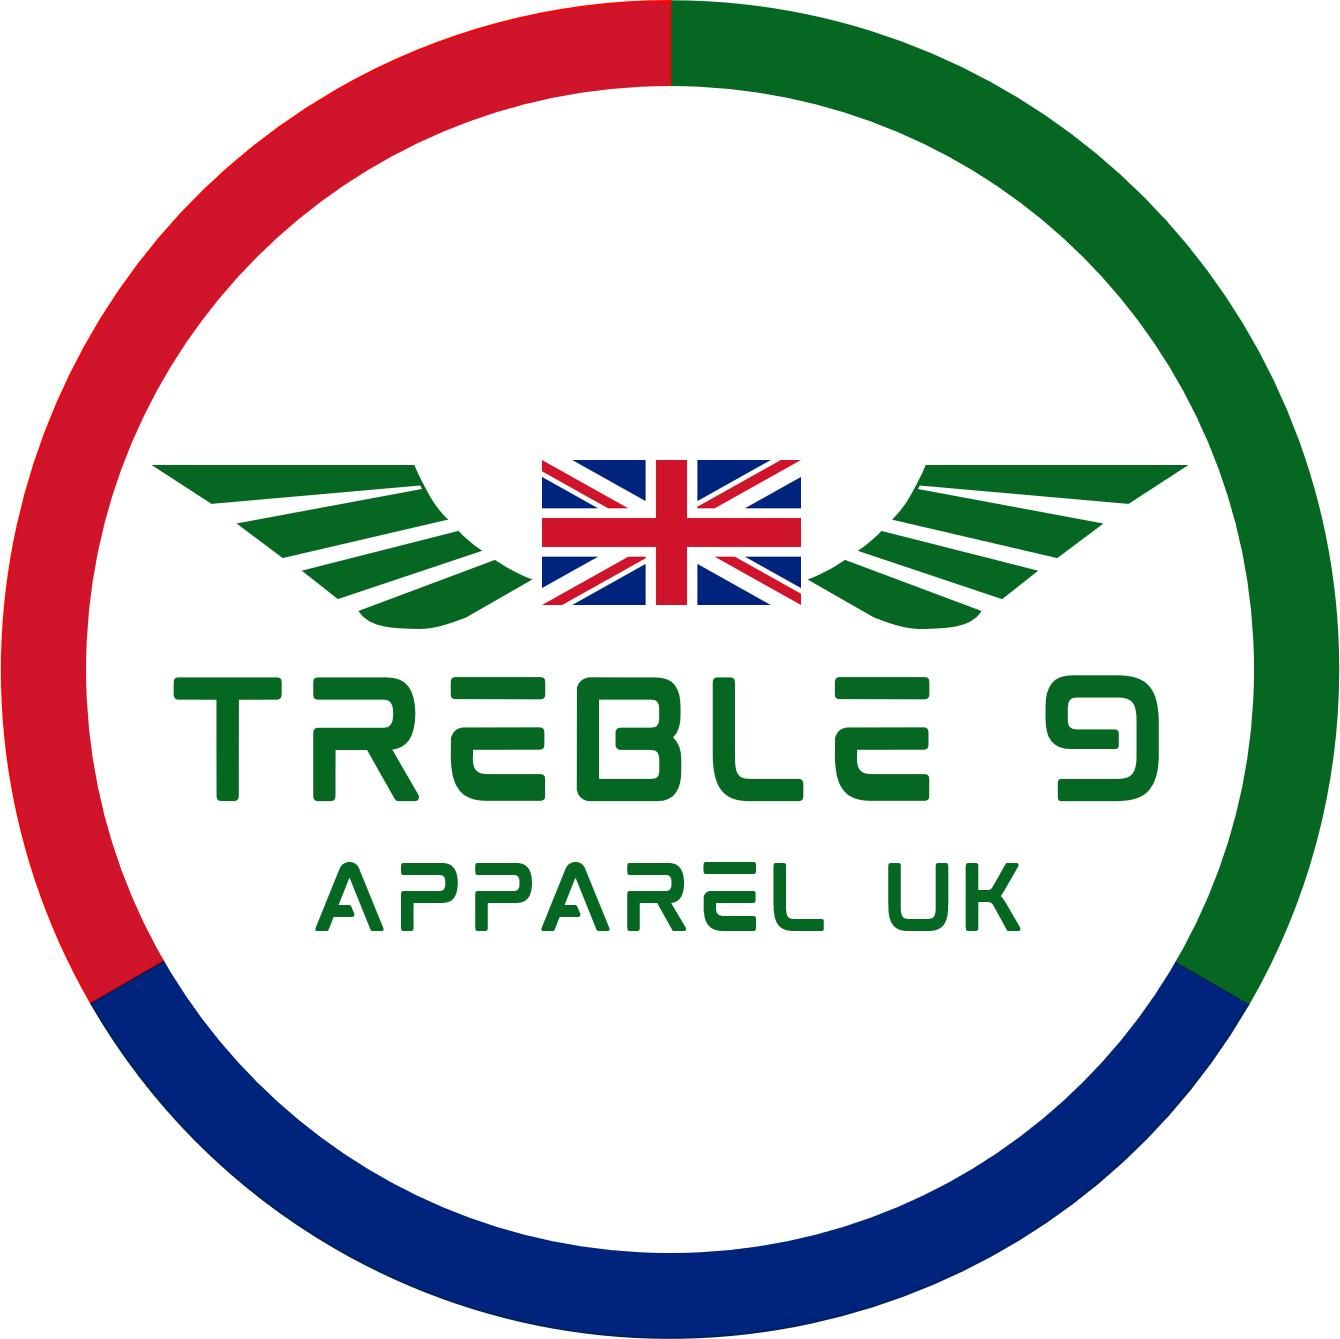 Treble 9 Apparel UK